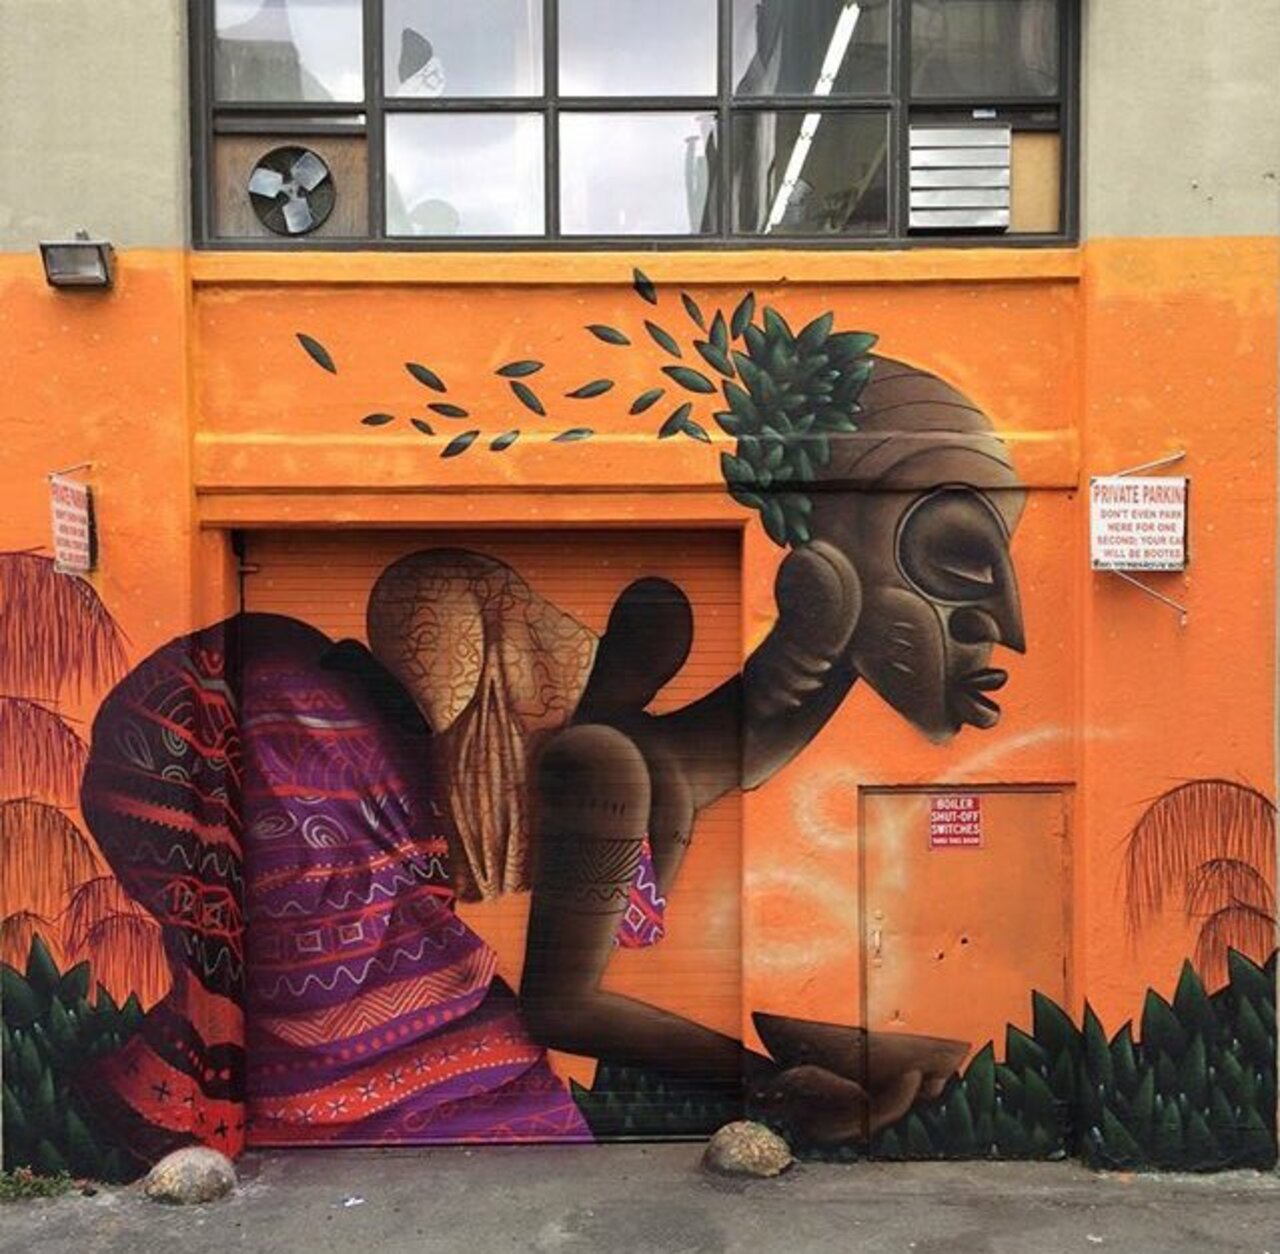 New Street Art by Alexandre Keto in NYC 

#art #graffiti #mural #streetart https://t.co/x916vPD7gy